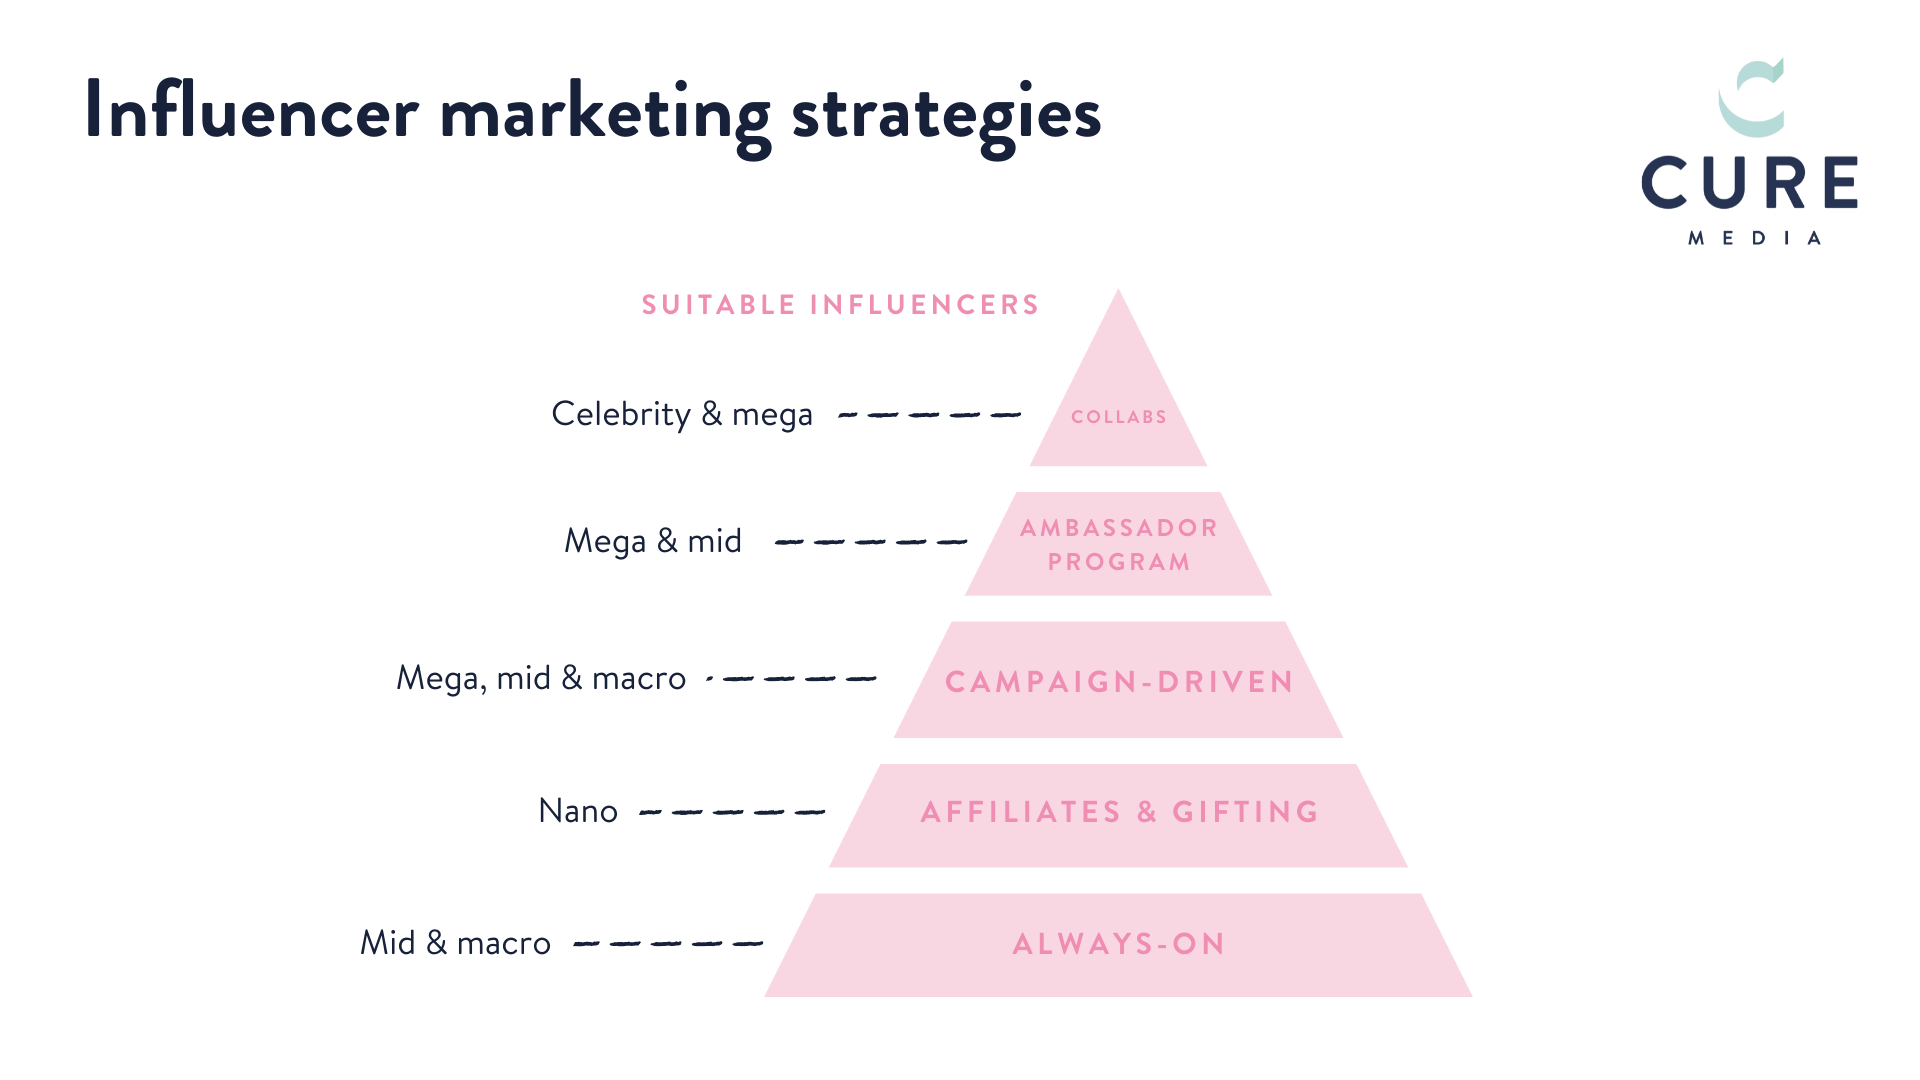 Influencer Marketing Strategies pyramid